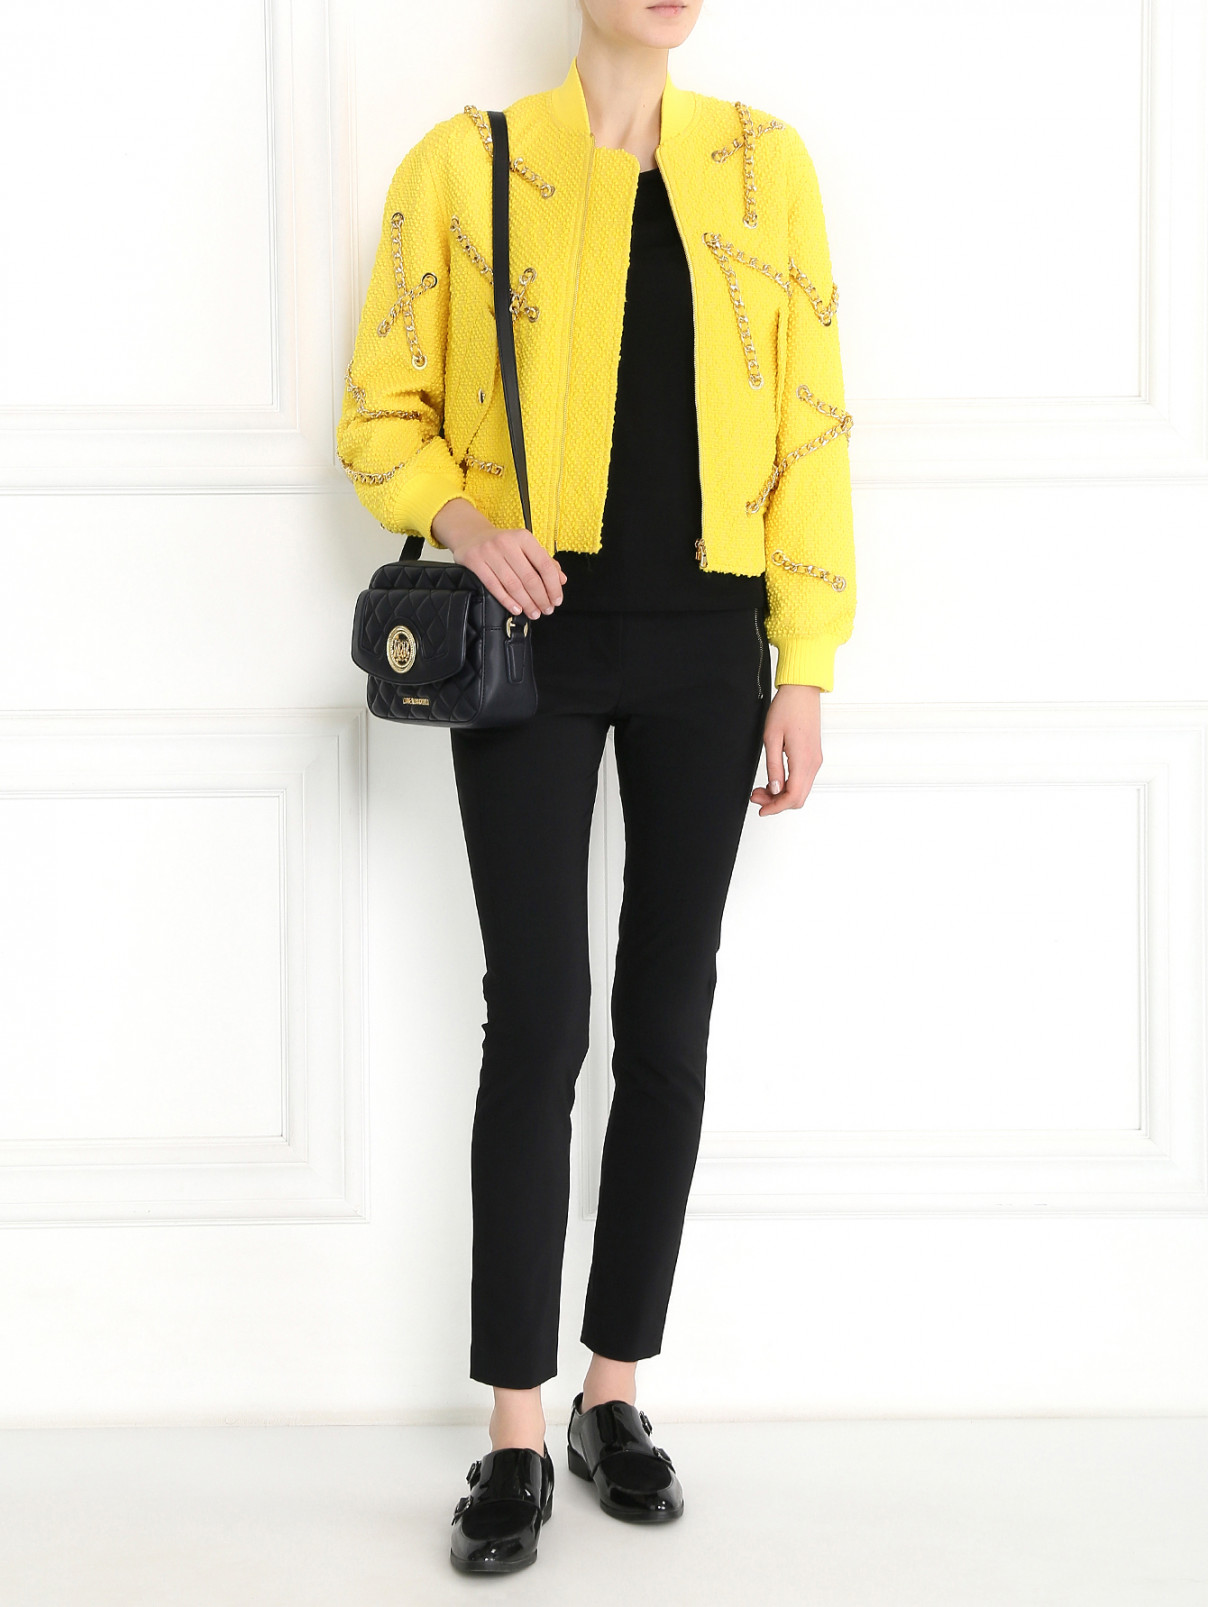 Бомбер из хлопка с контрастной фурнитурой Moschino Couture  –  Модель Общий вид  – Цвет:  Желтый